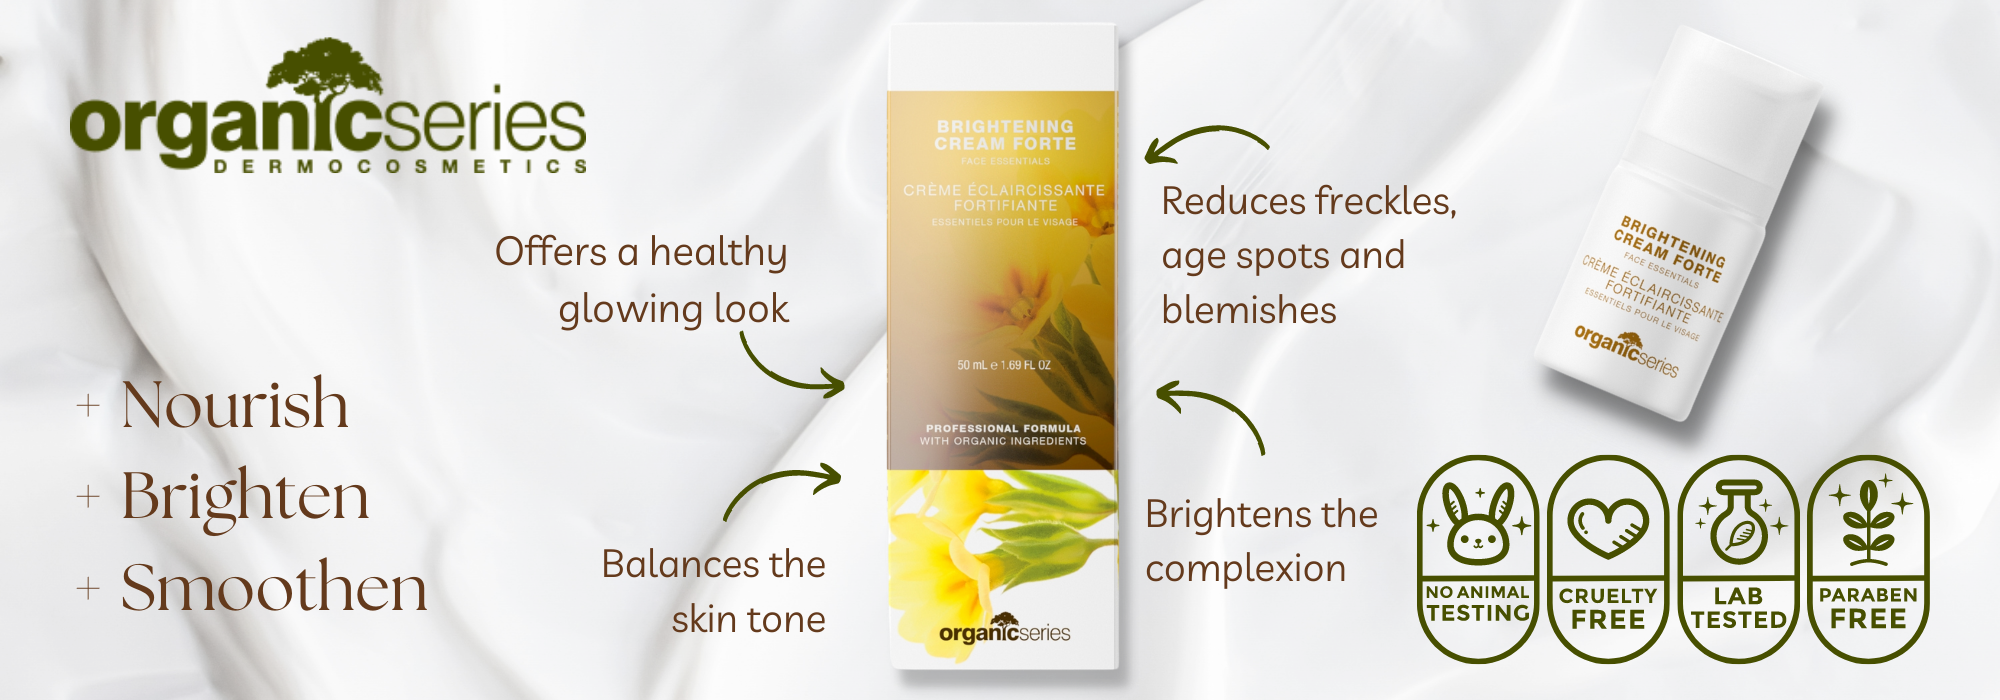 brightening cream forte by organic series